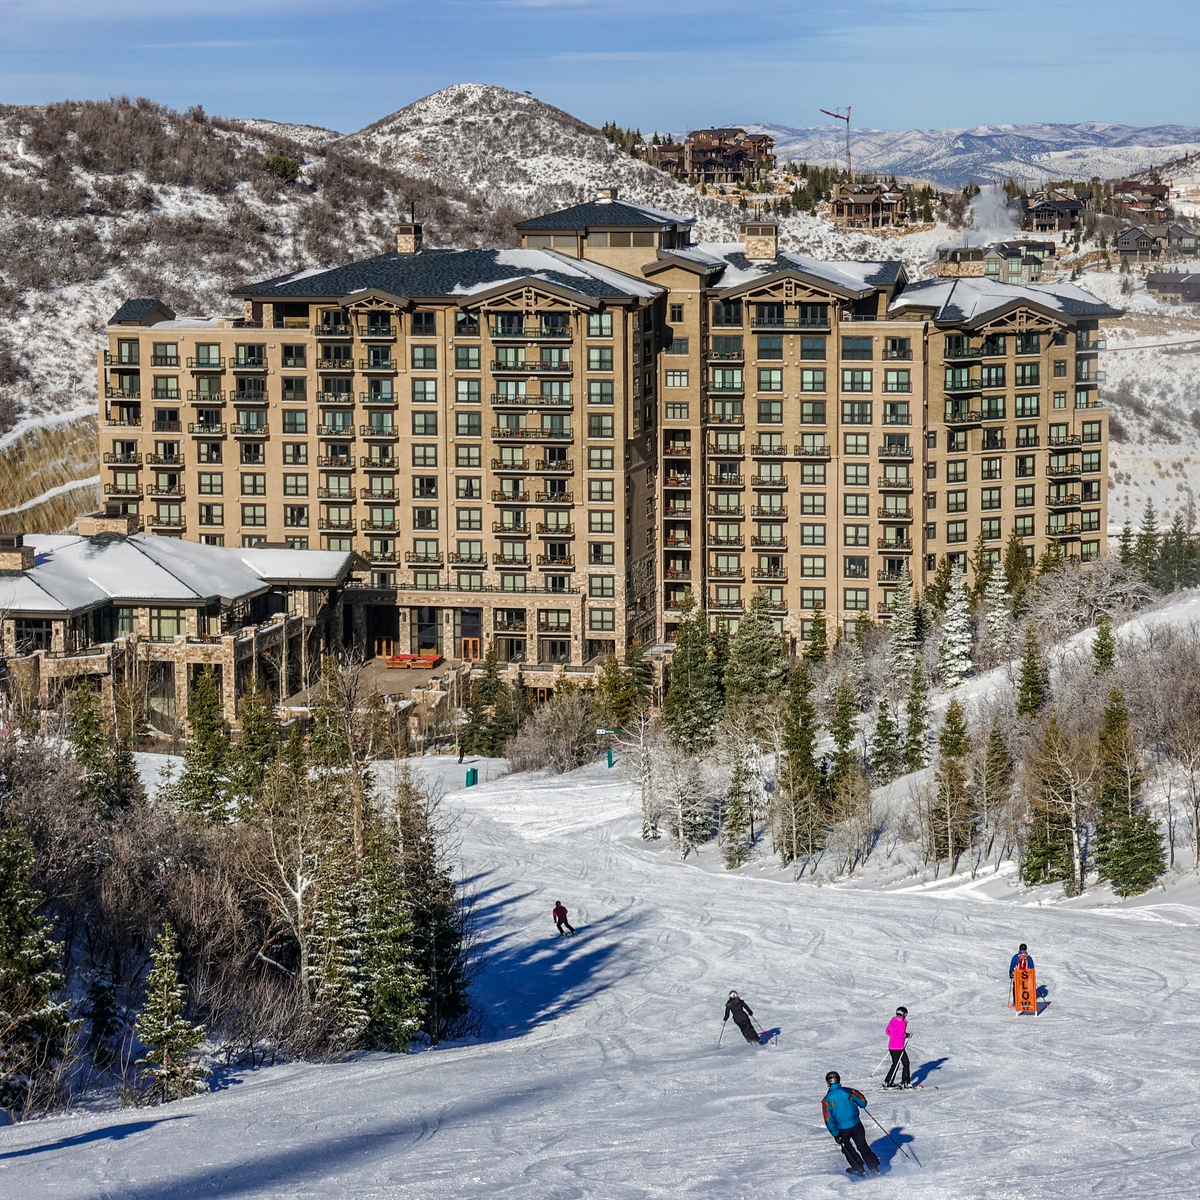 Mejores centros de esquí de Utah para cada nivel de habilidad e interés - 7